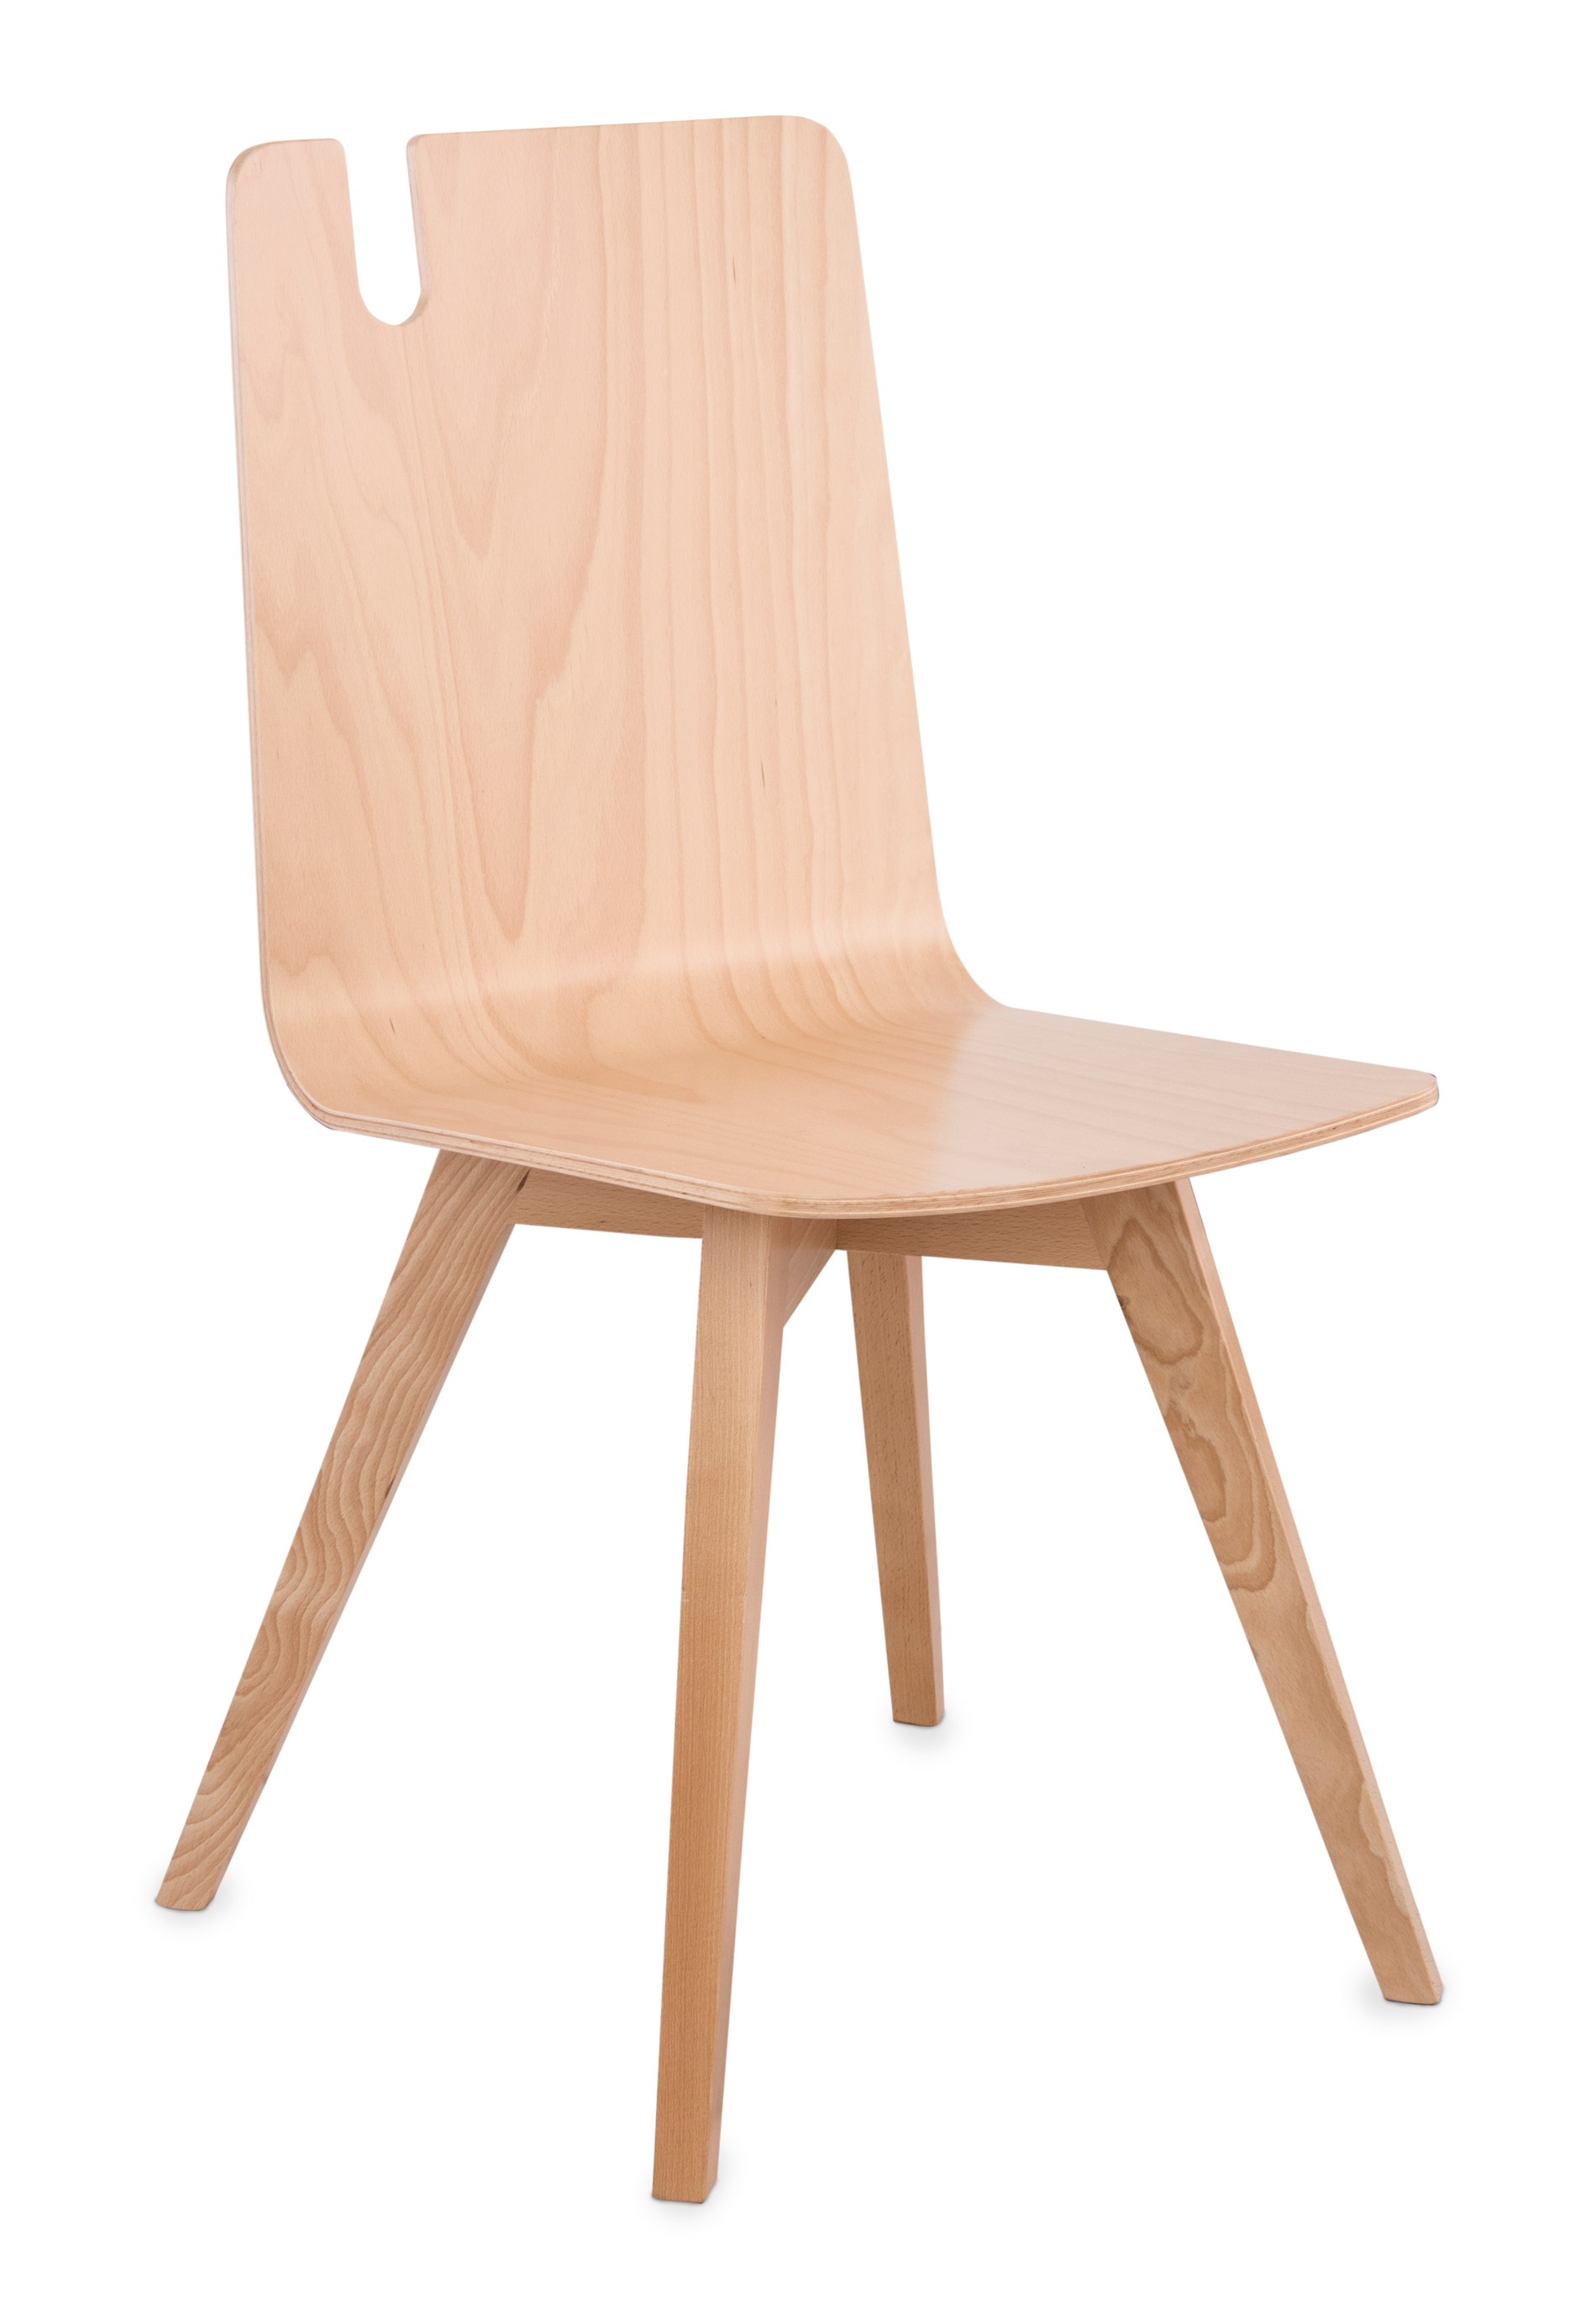 Židle Falun wood